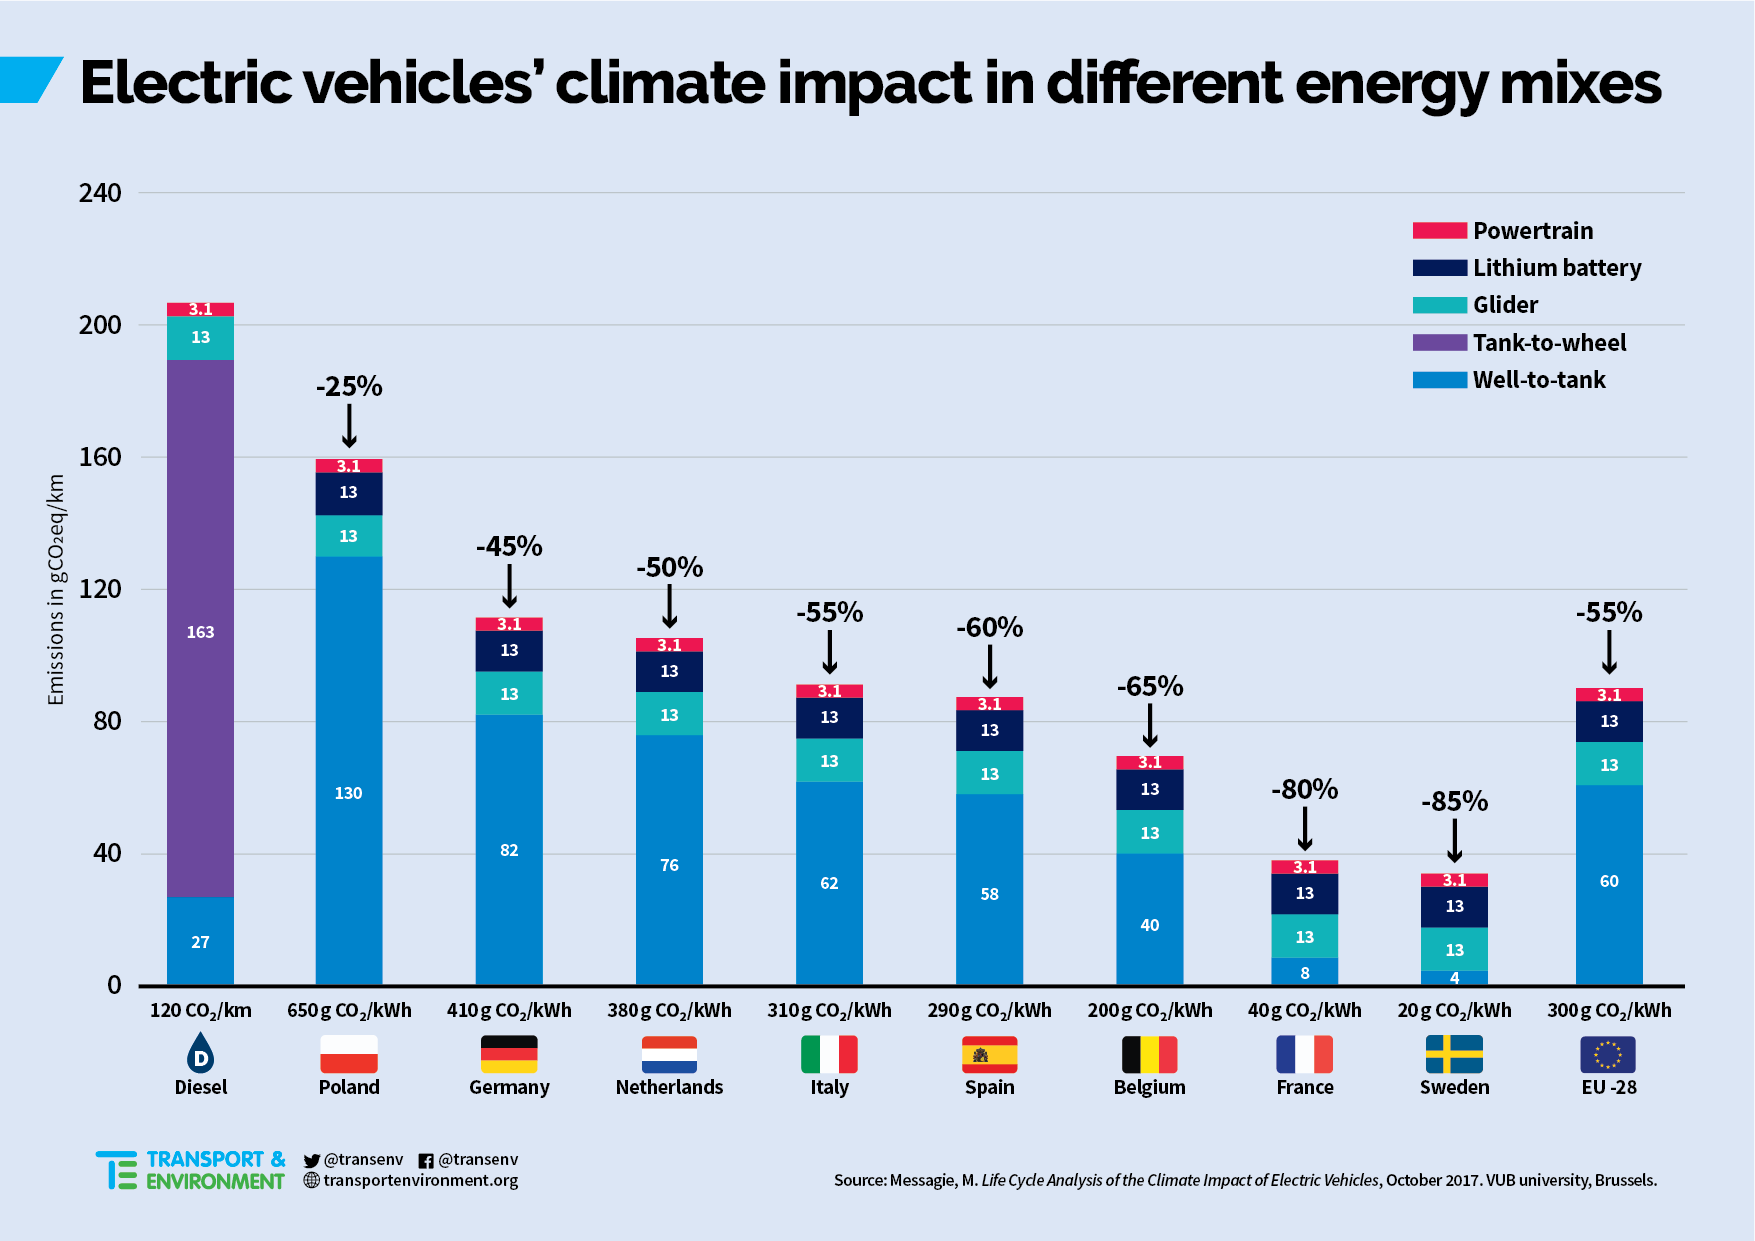 Diesel Emissions Chart